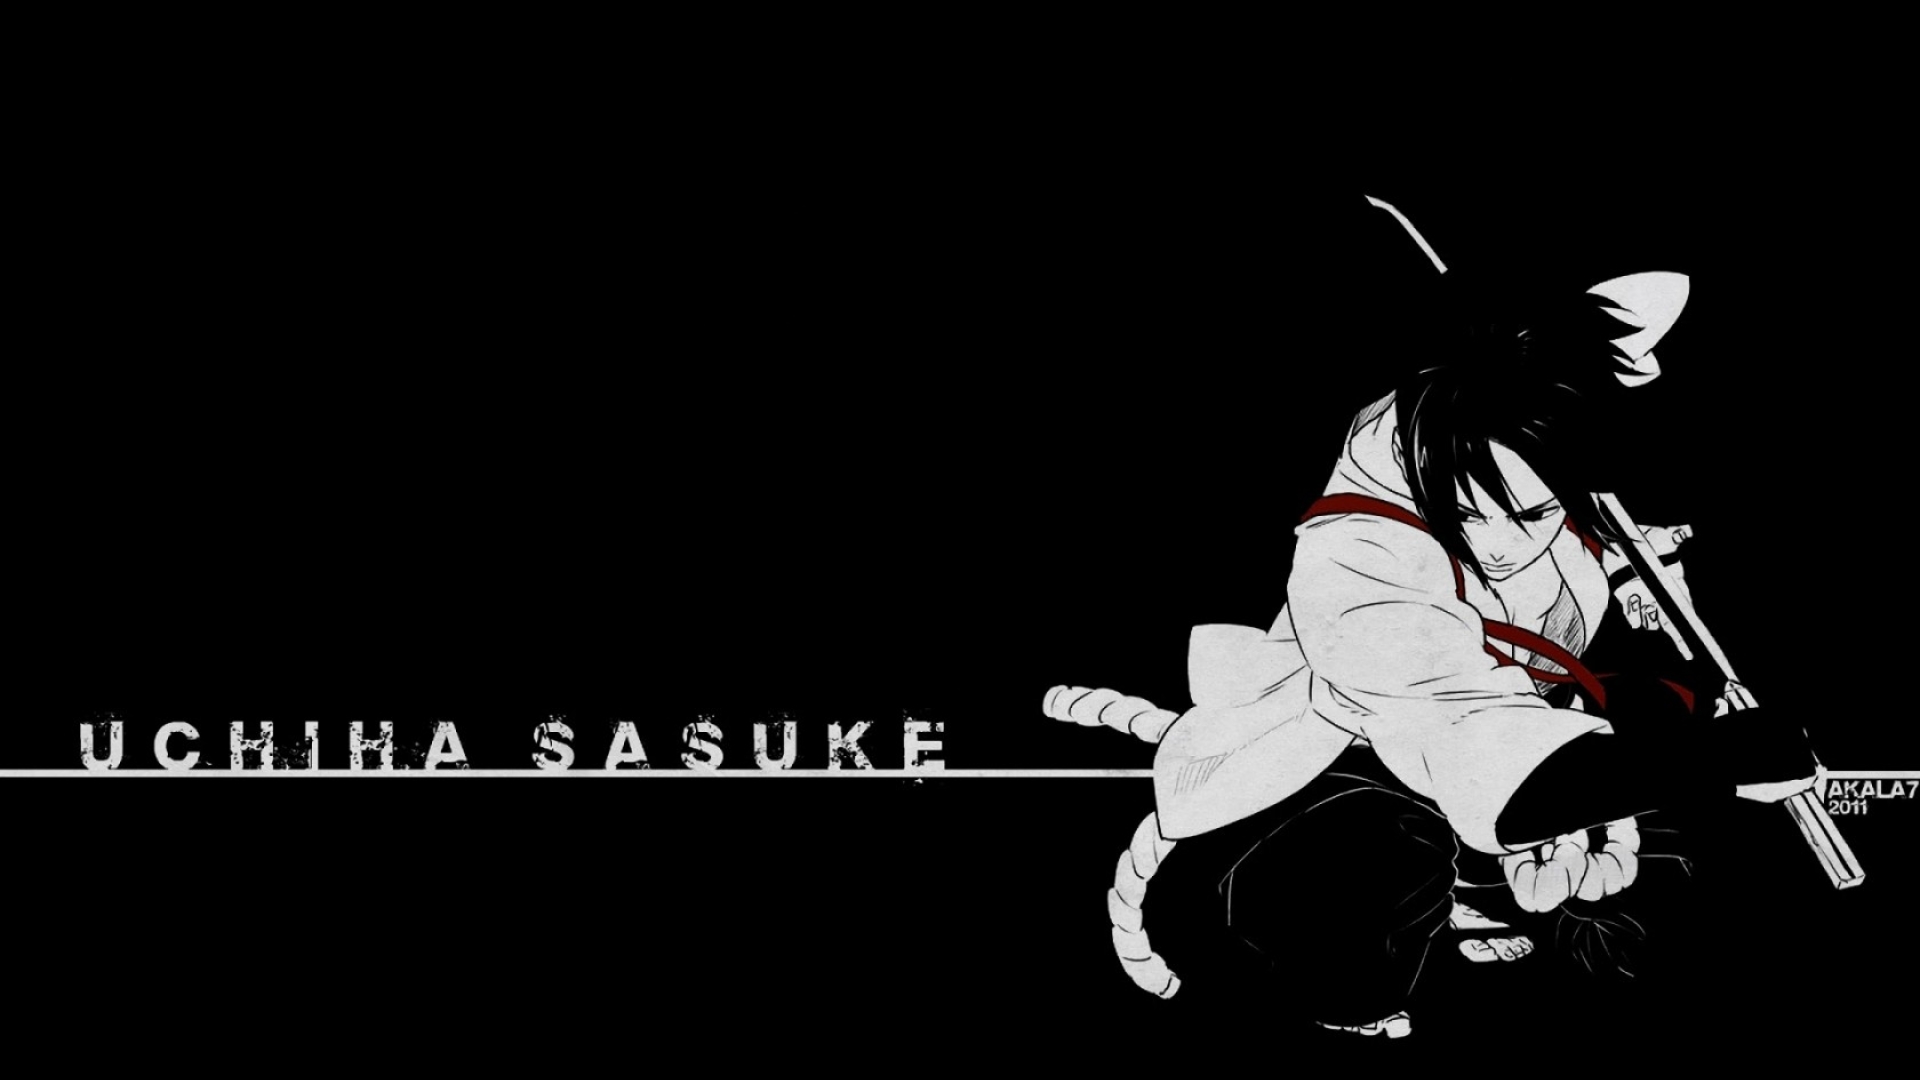 1920x1080 uchiha sasuke, naruto, art 1080P Laptop Full HD Wallpaper, HD  Anime 4K Wallpapers, Images, Photos and Background - Wallpapers Den